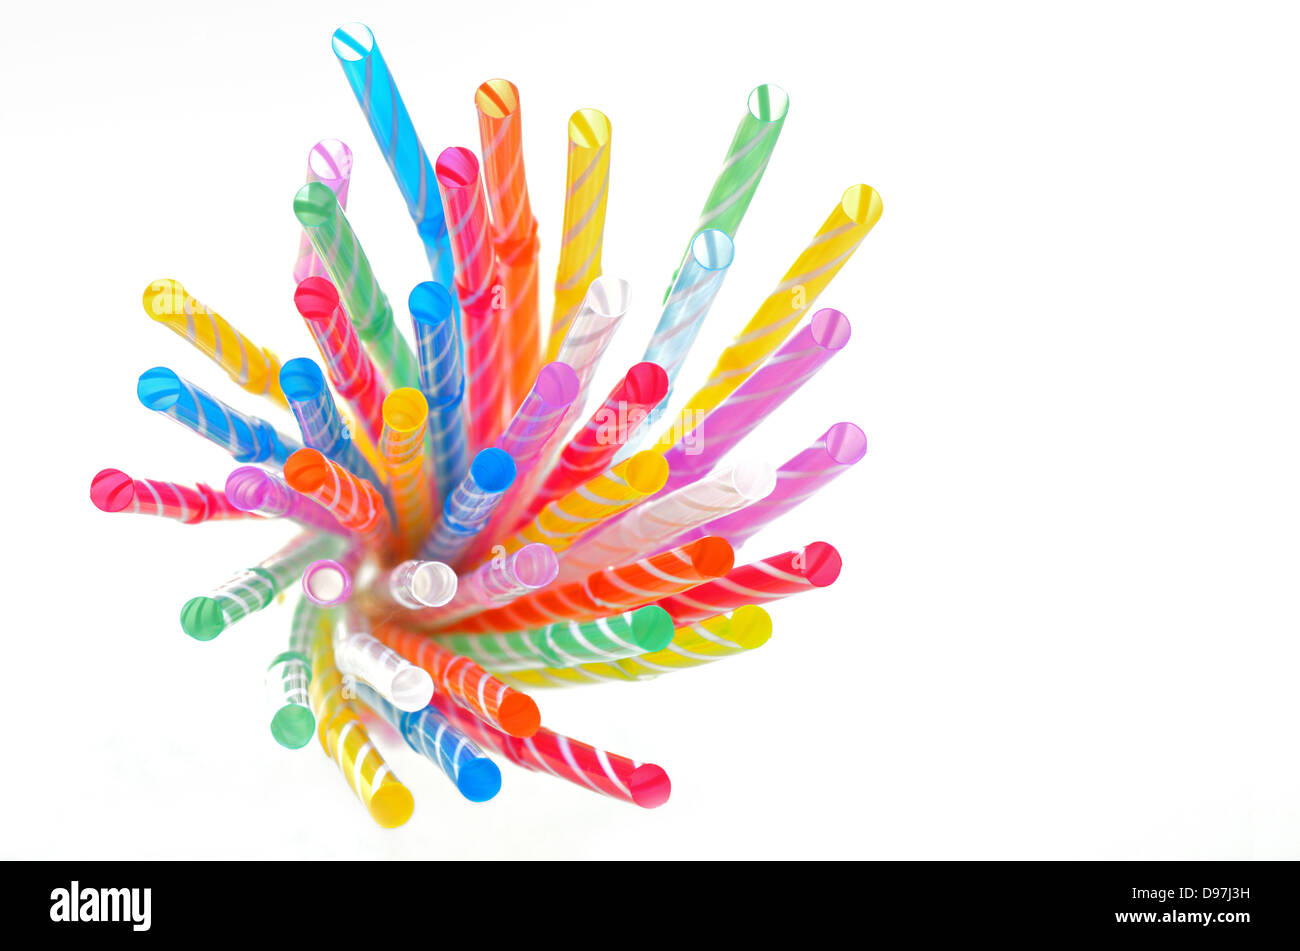 multi color flexible straws on white background Stock Photo